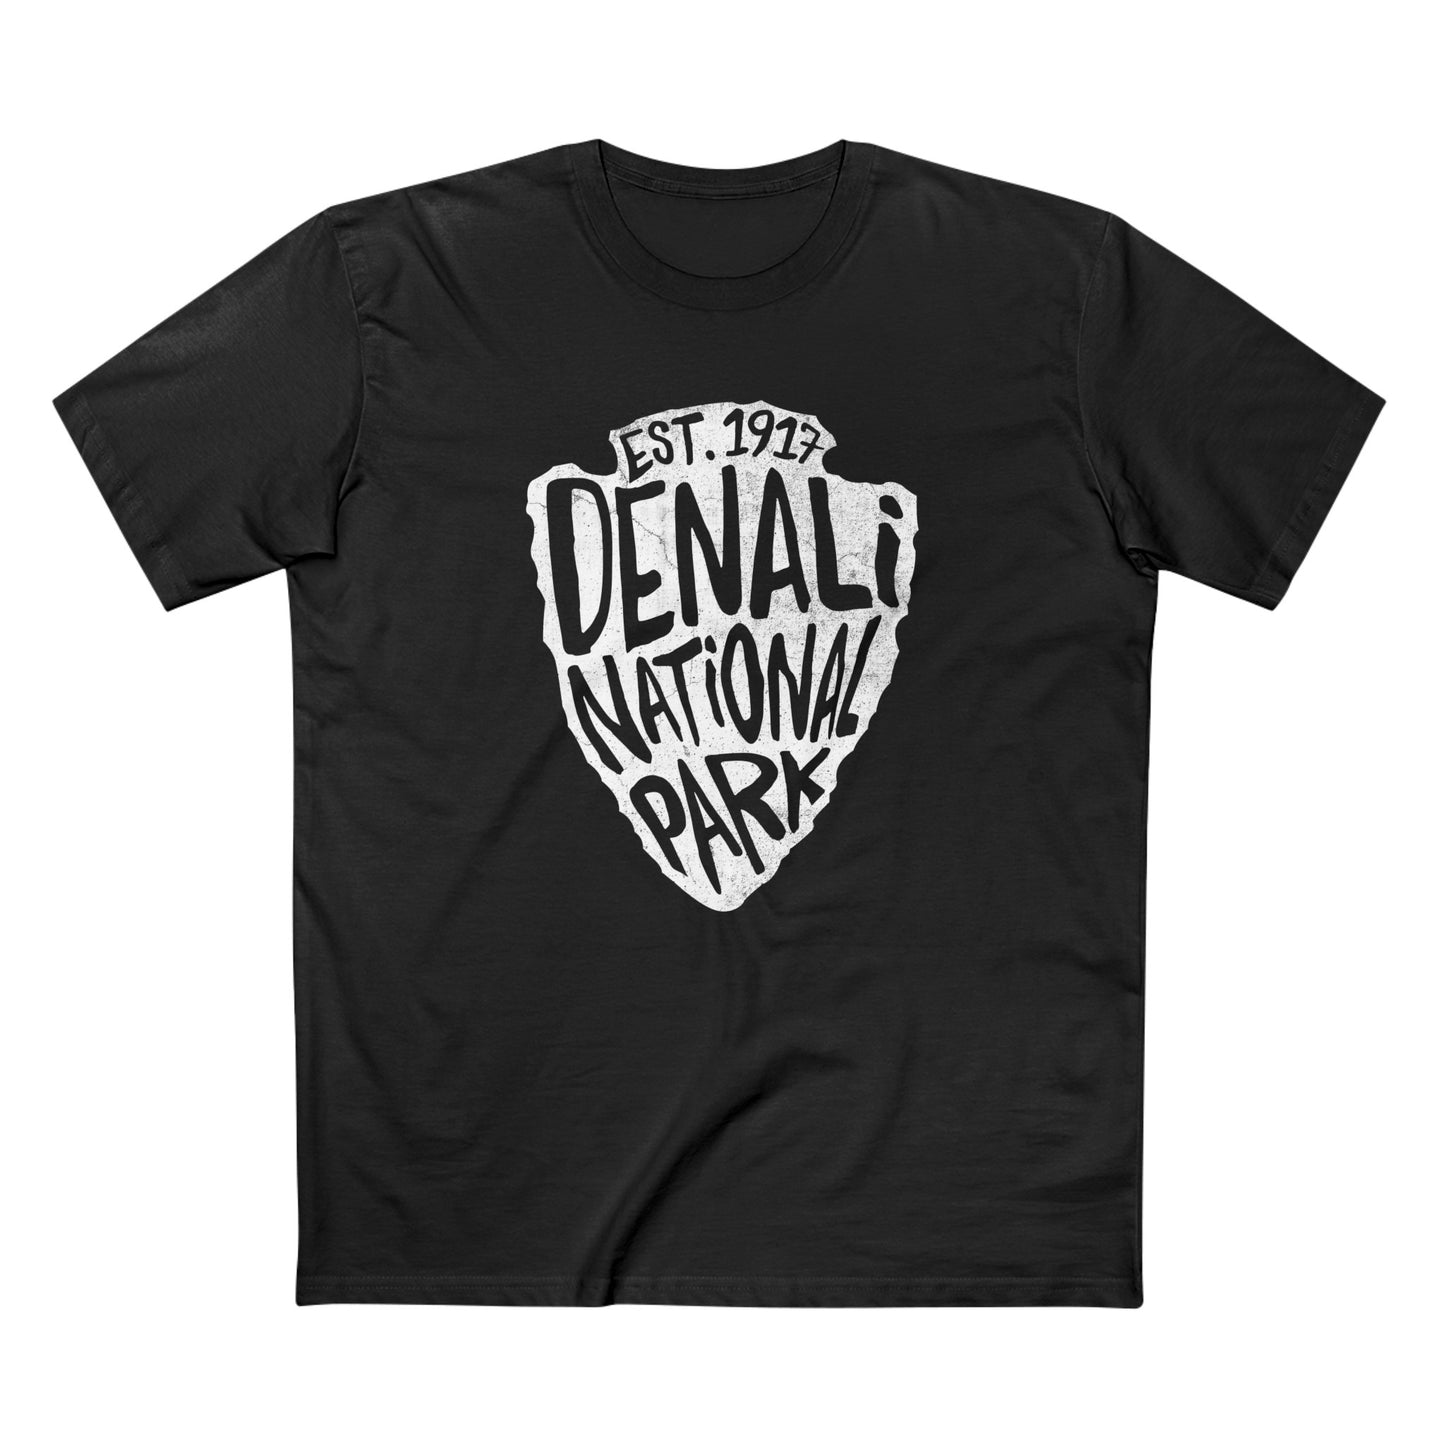 Denali National Park T-Shirt - Arrowhead Design